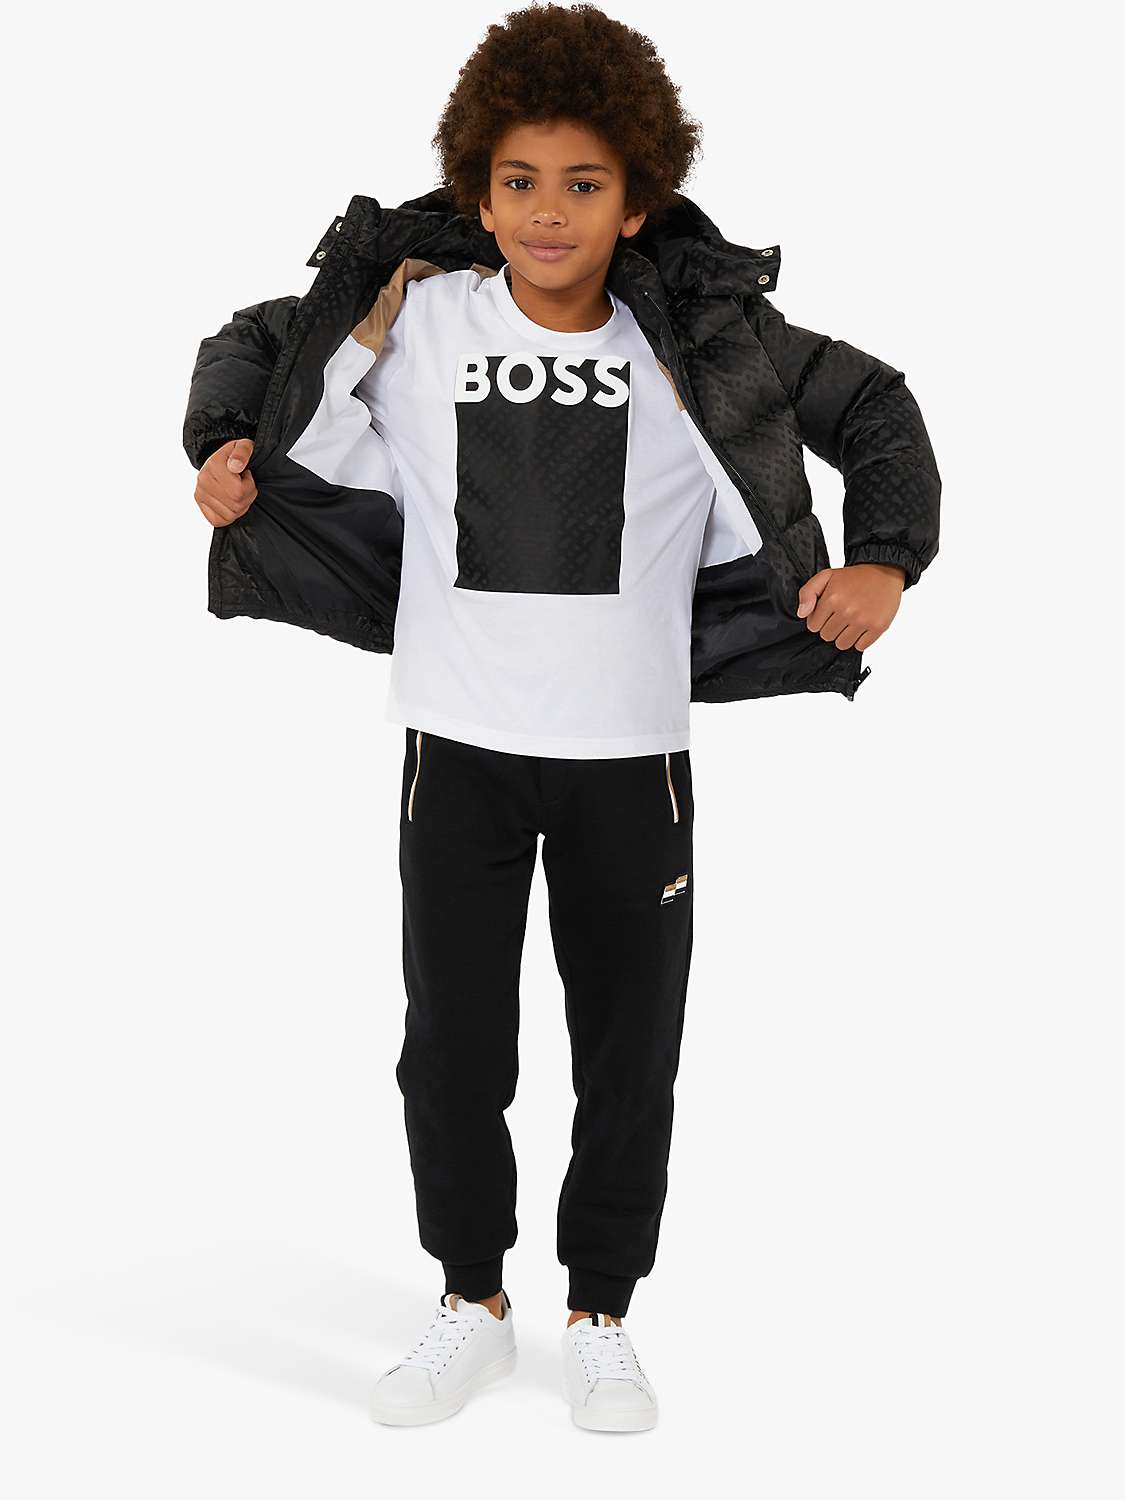 Buy BOSS Kids' Jacquard Monogram Puffer Jacket, Black Online at johnlewis.com